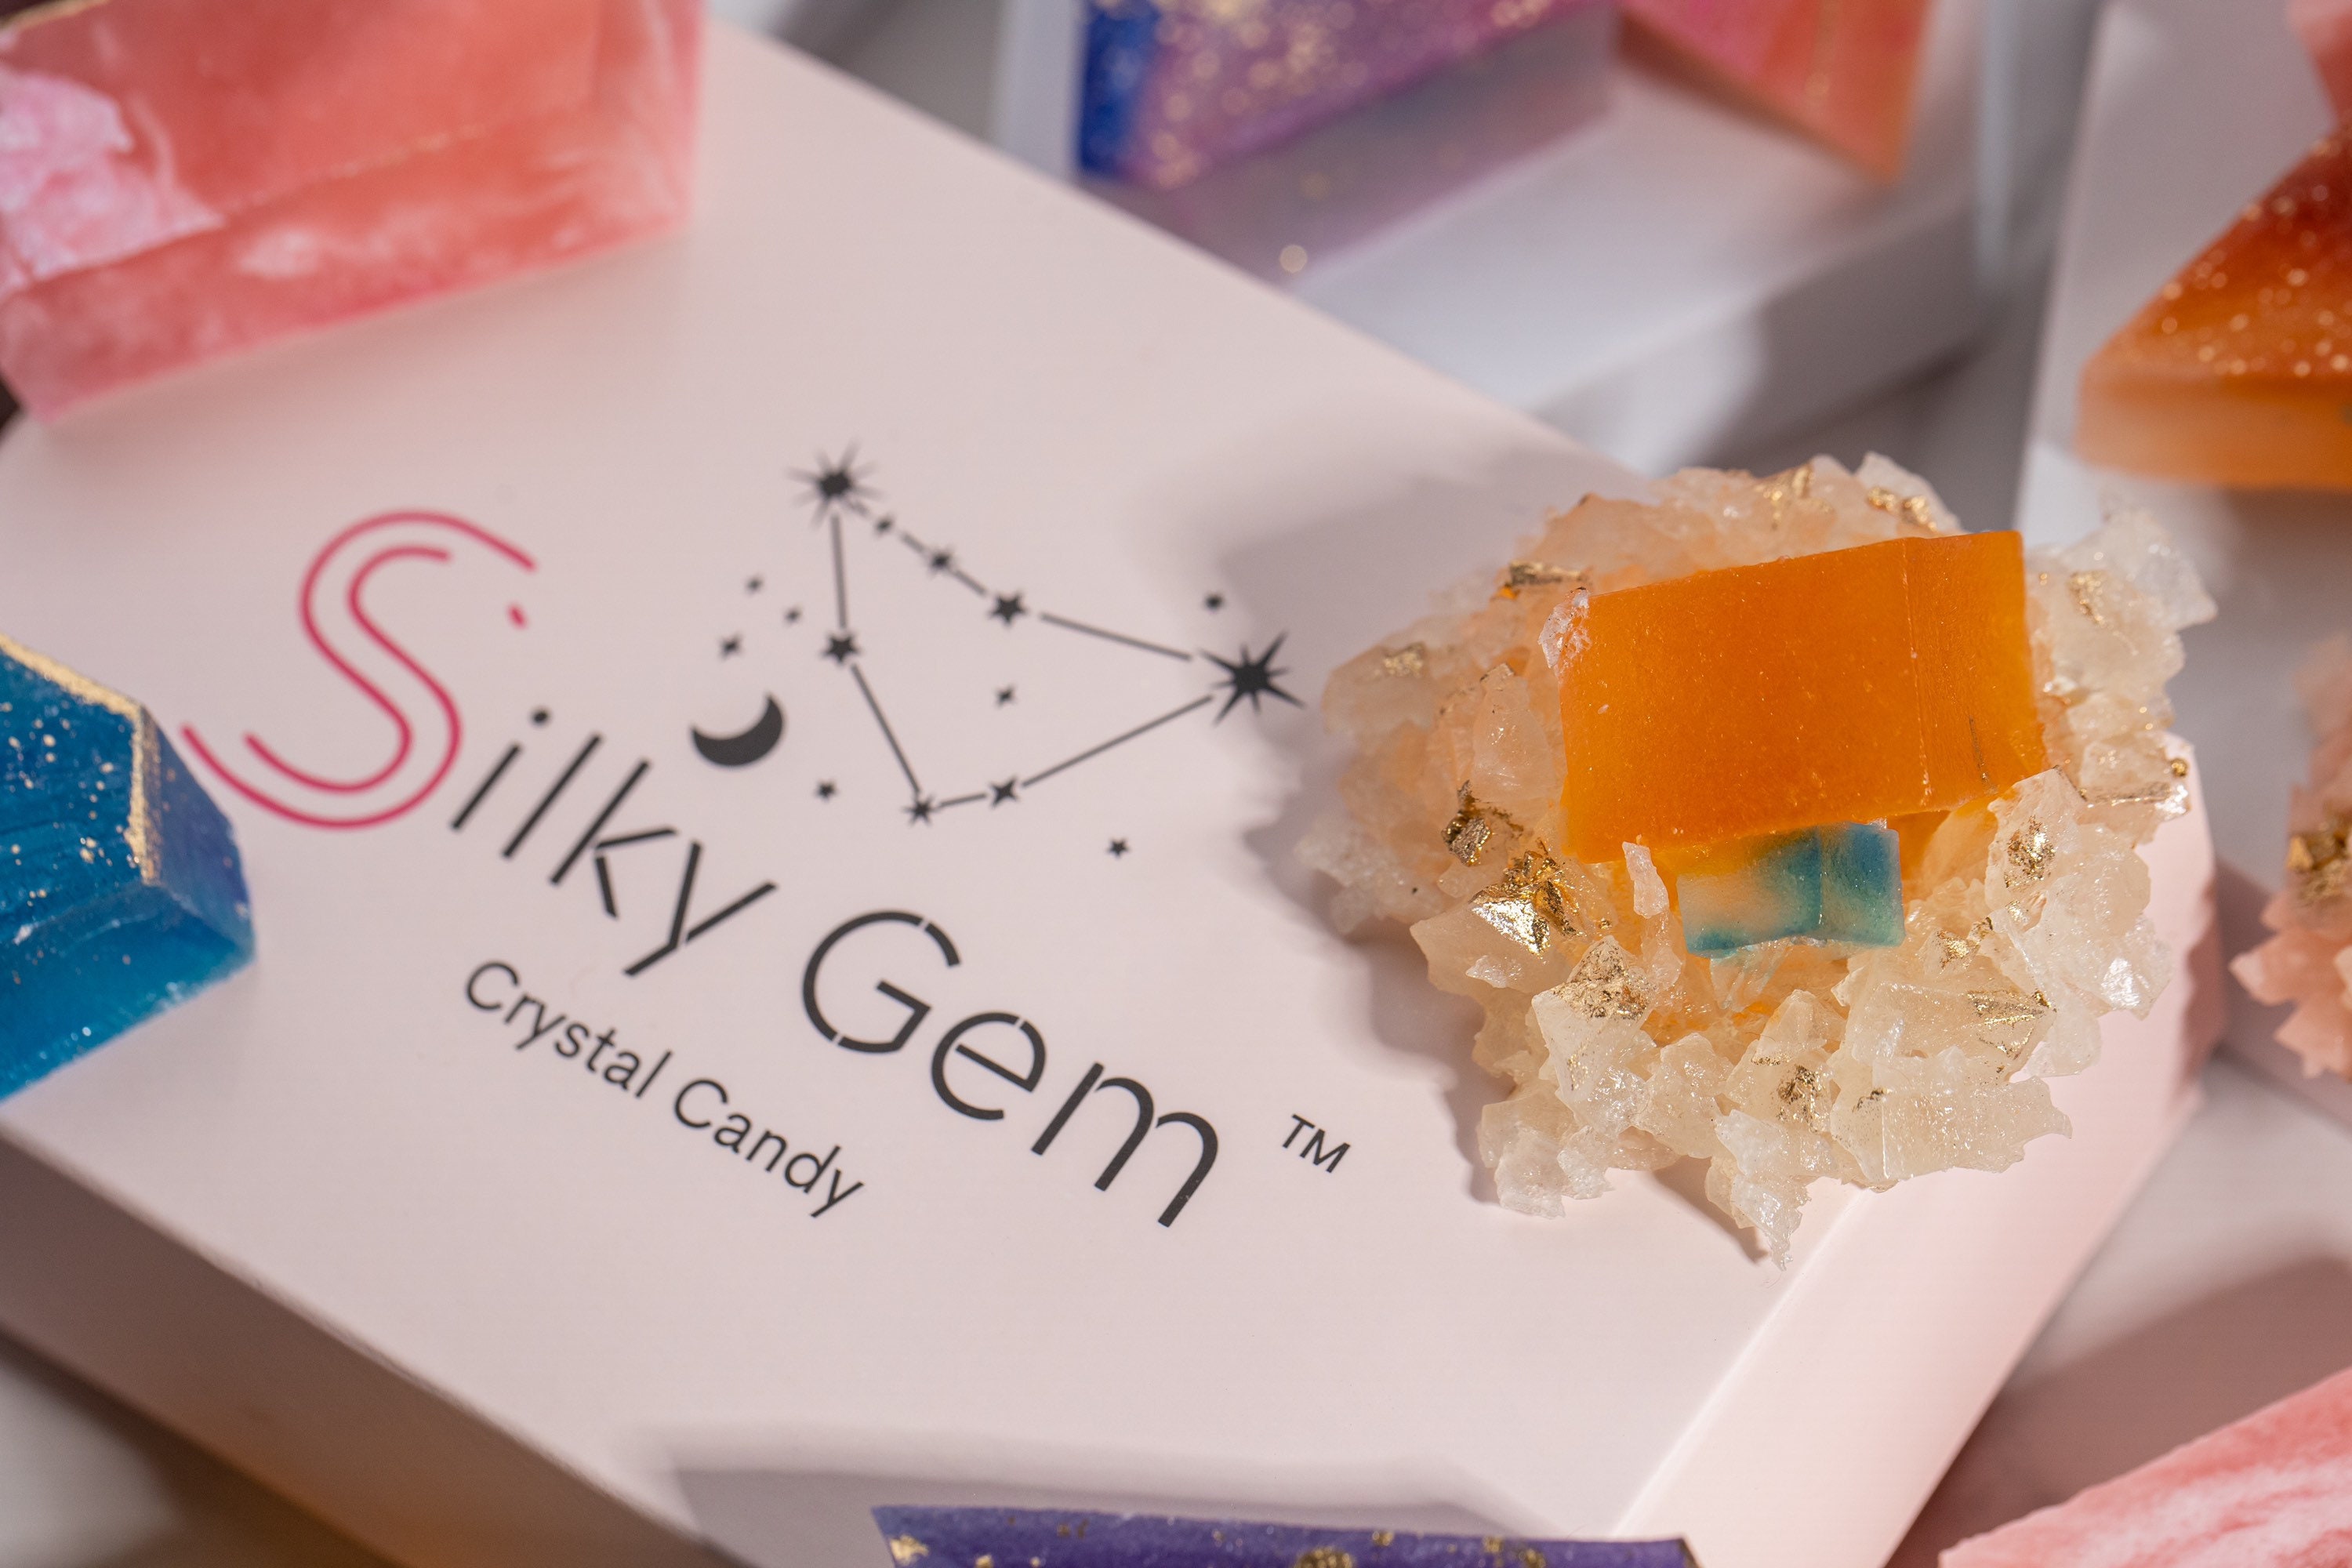 Kohakutou Crystal Gummy Candy (Flavored Recipe) – Sugar Geek Show